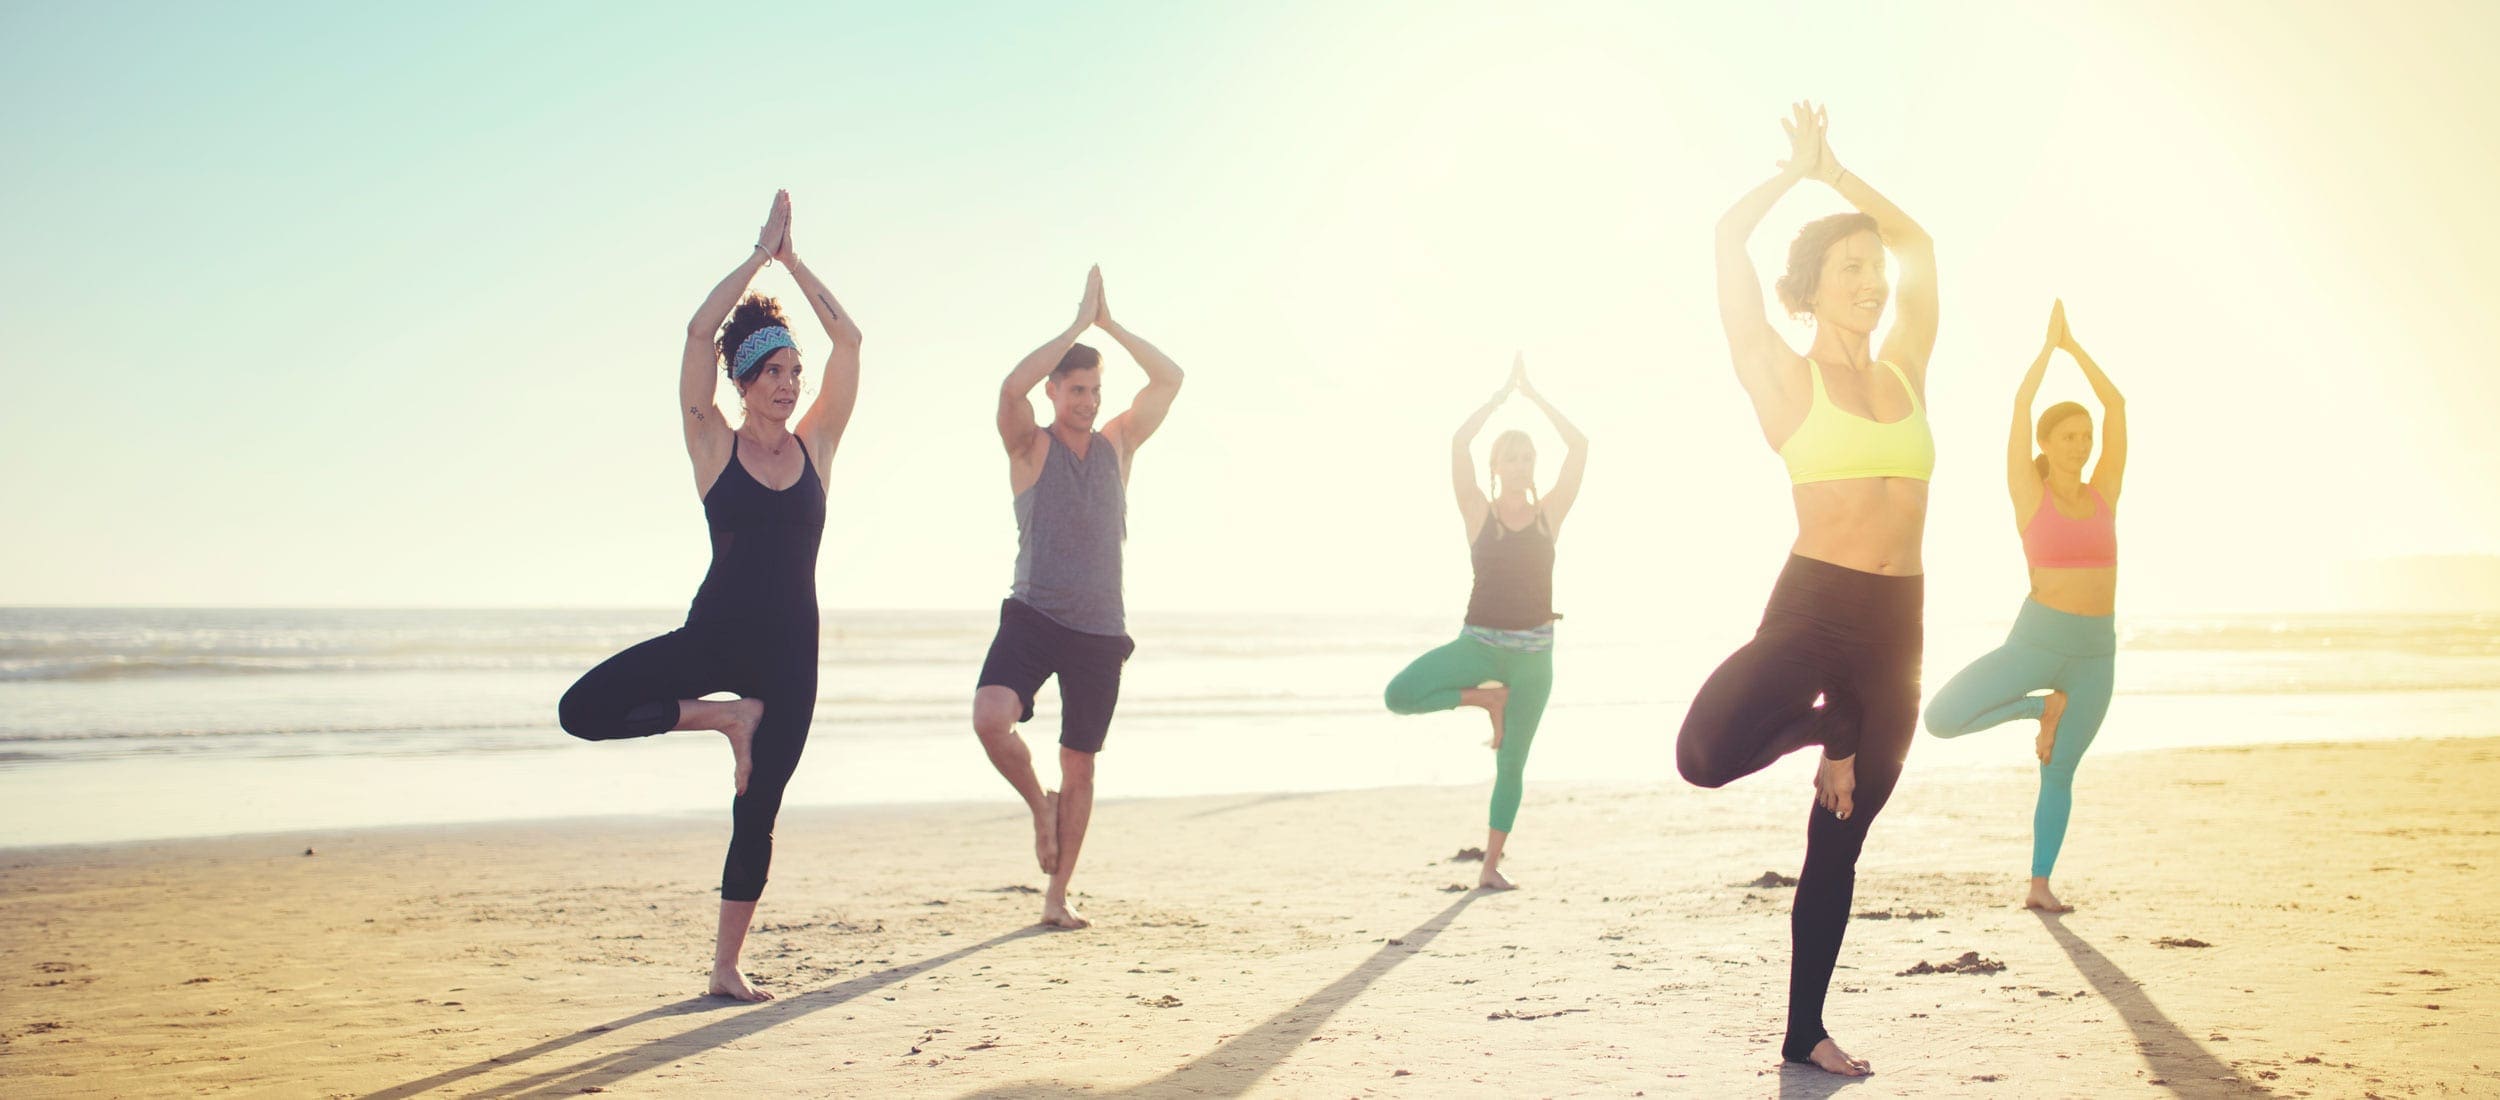 8 Benefits of Beach Yoga